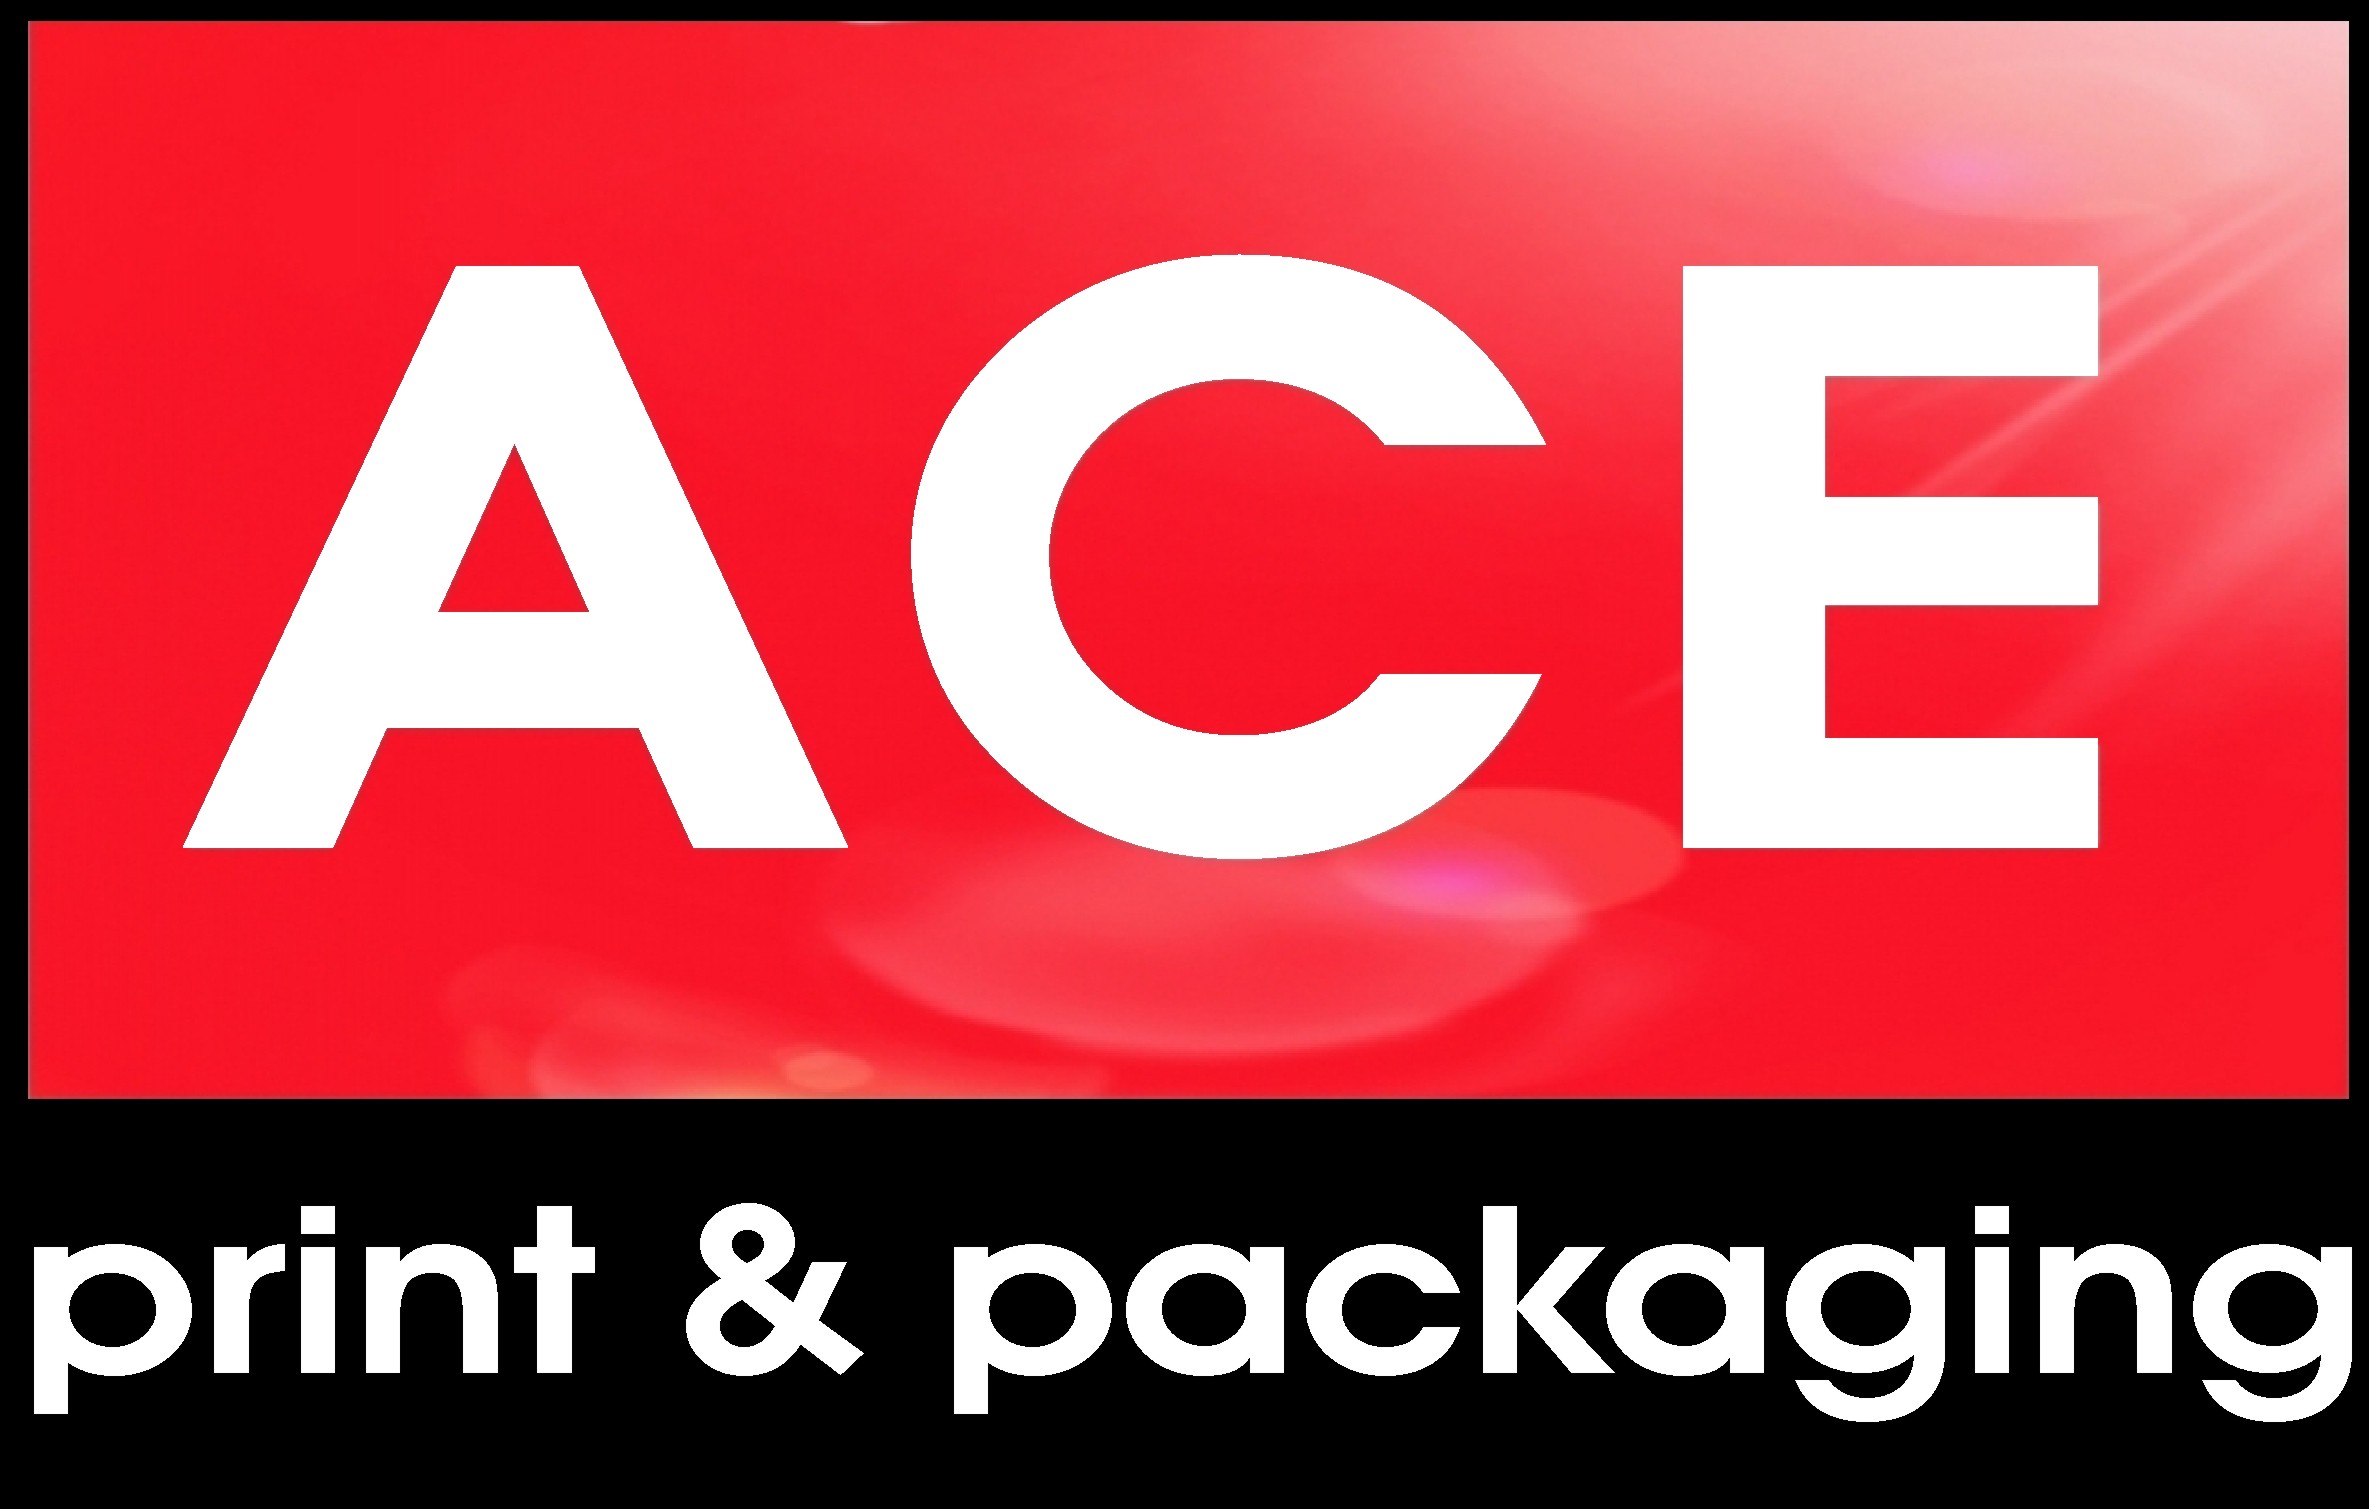 Logon ACE print & packaging